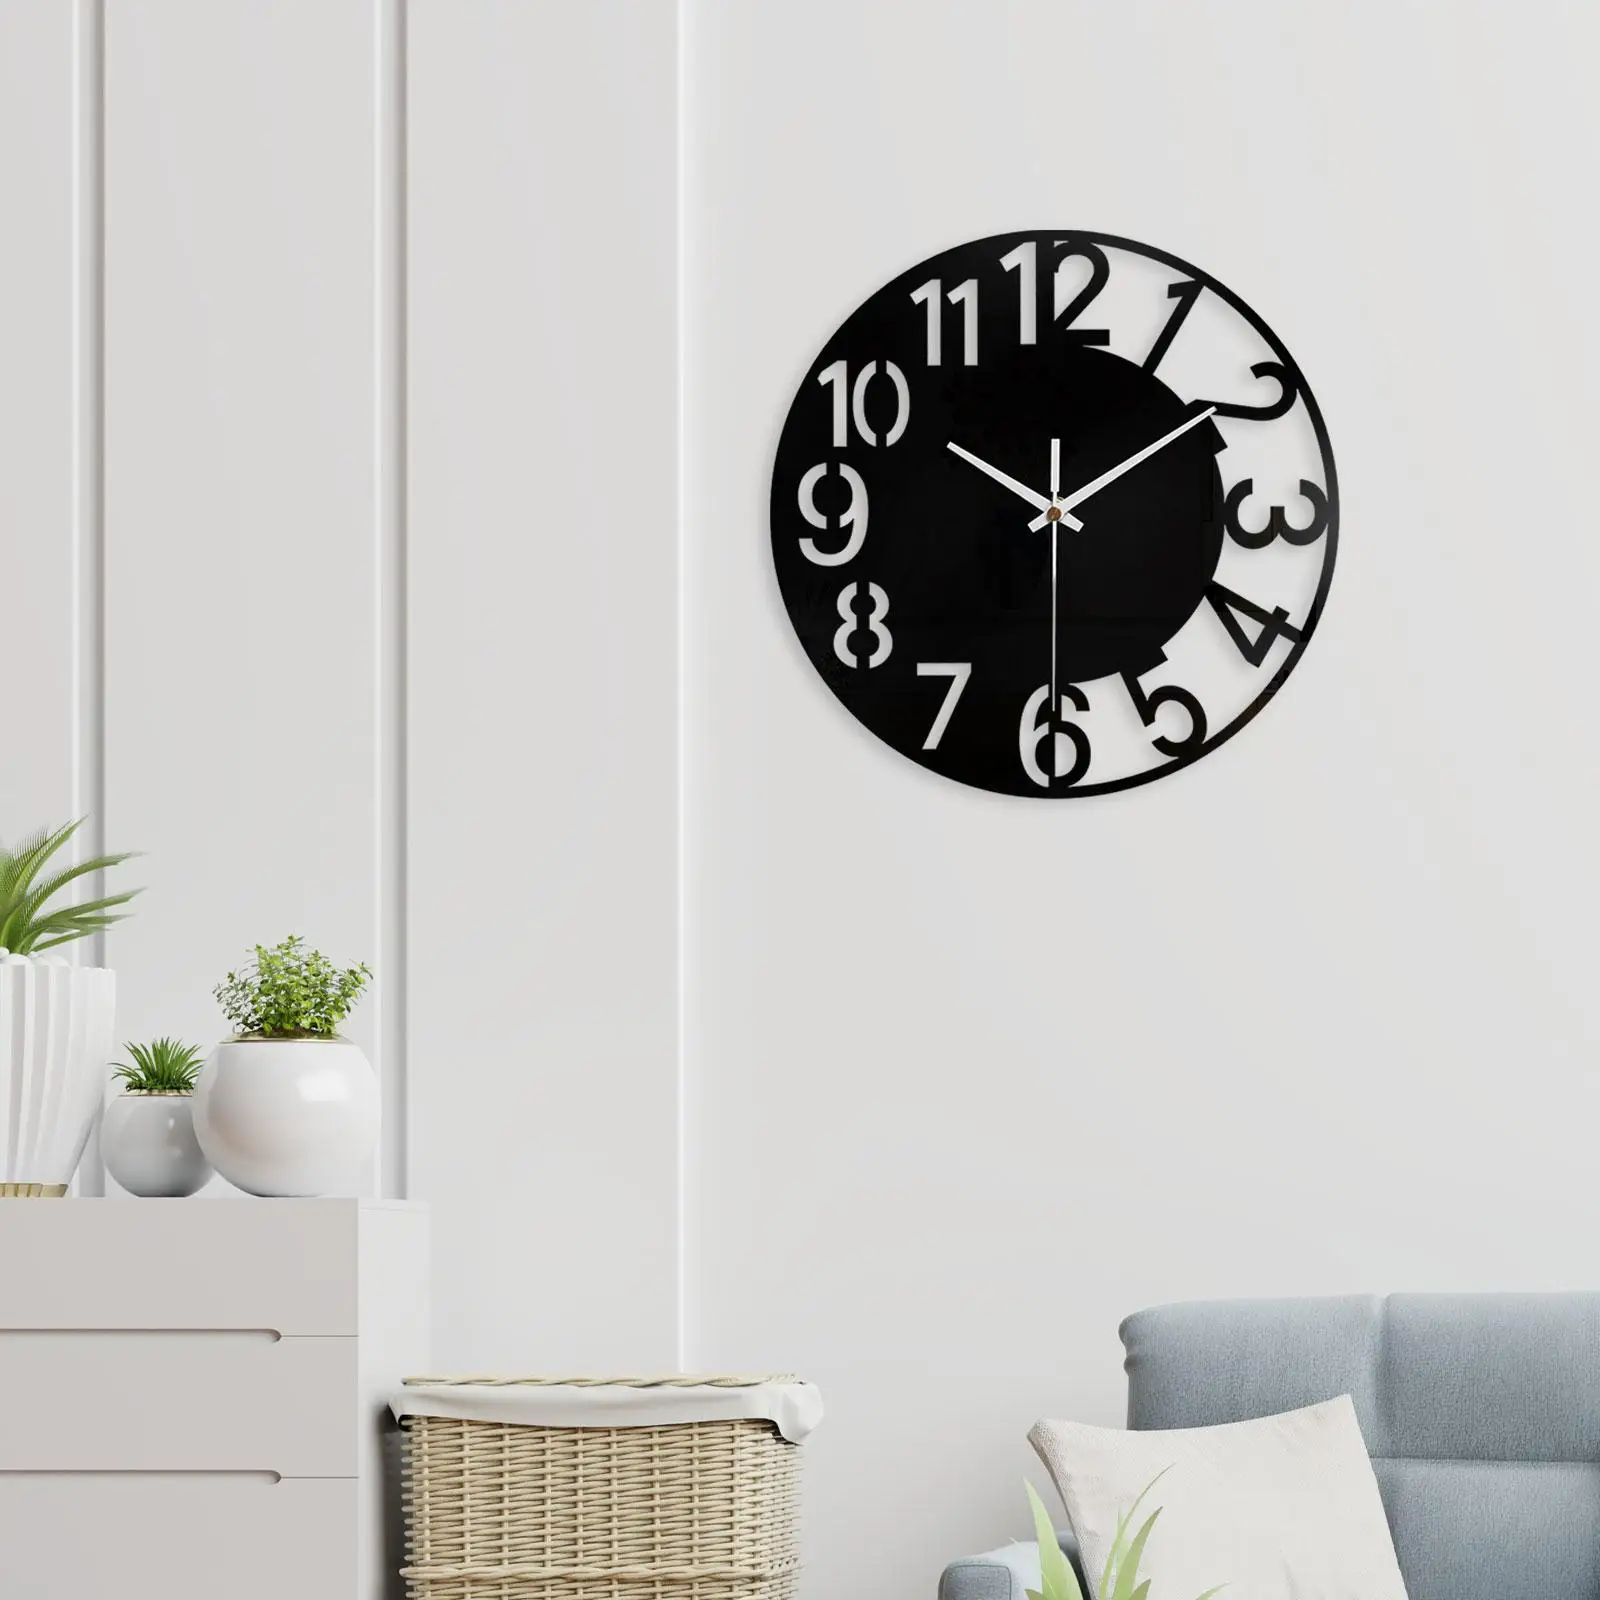 Acrylic Wall Clock Modern Style Large Wall Clock for Office Bedroom Bathroom